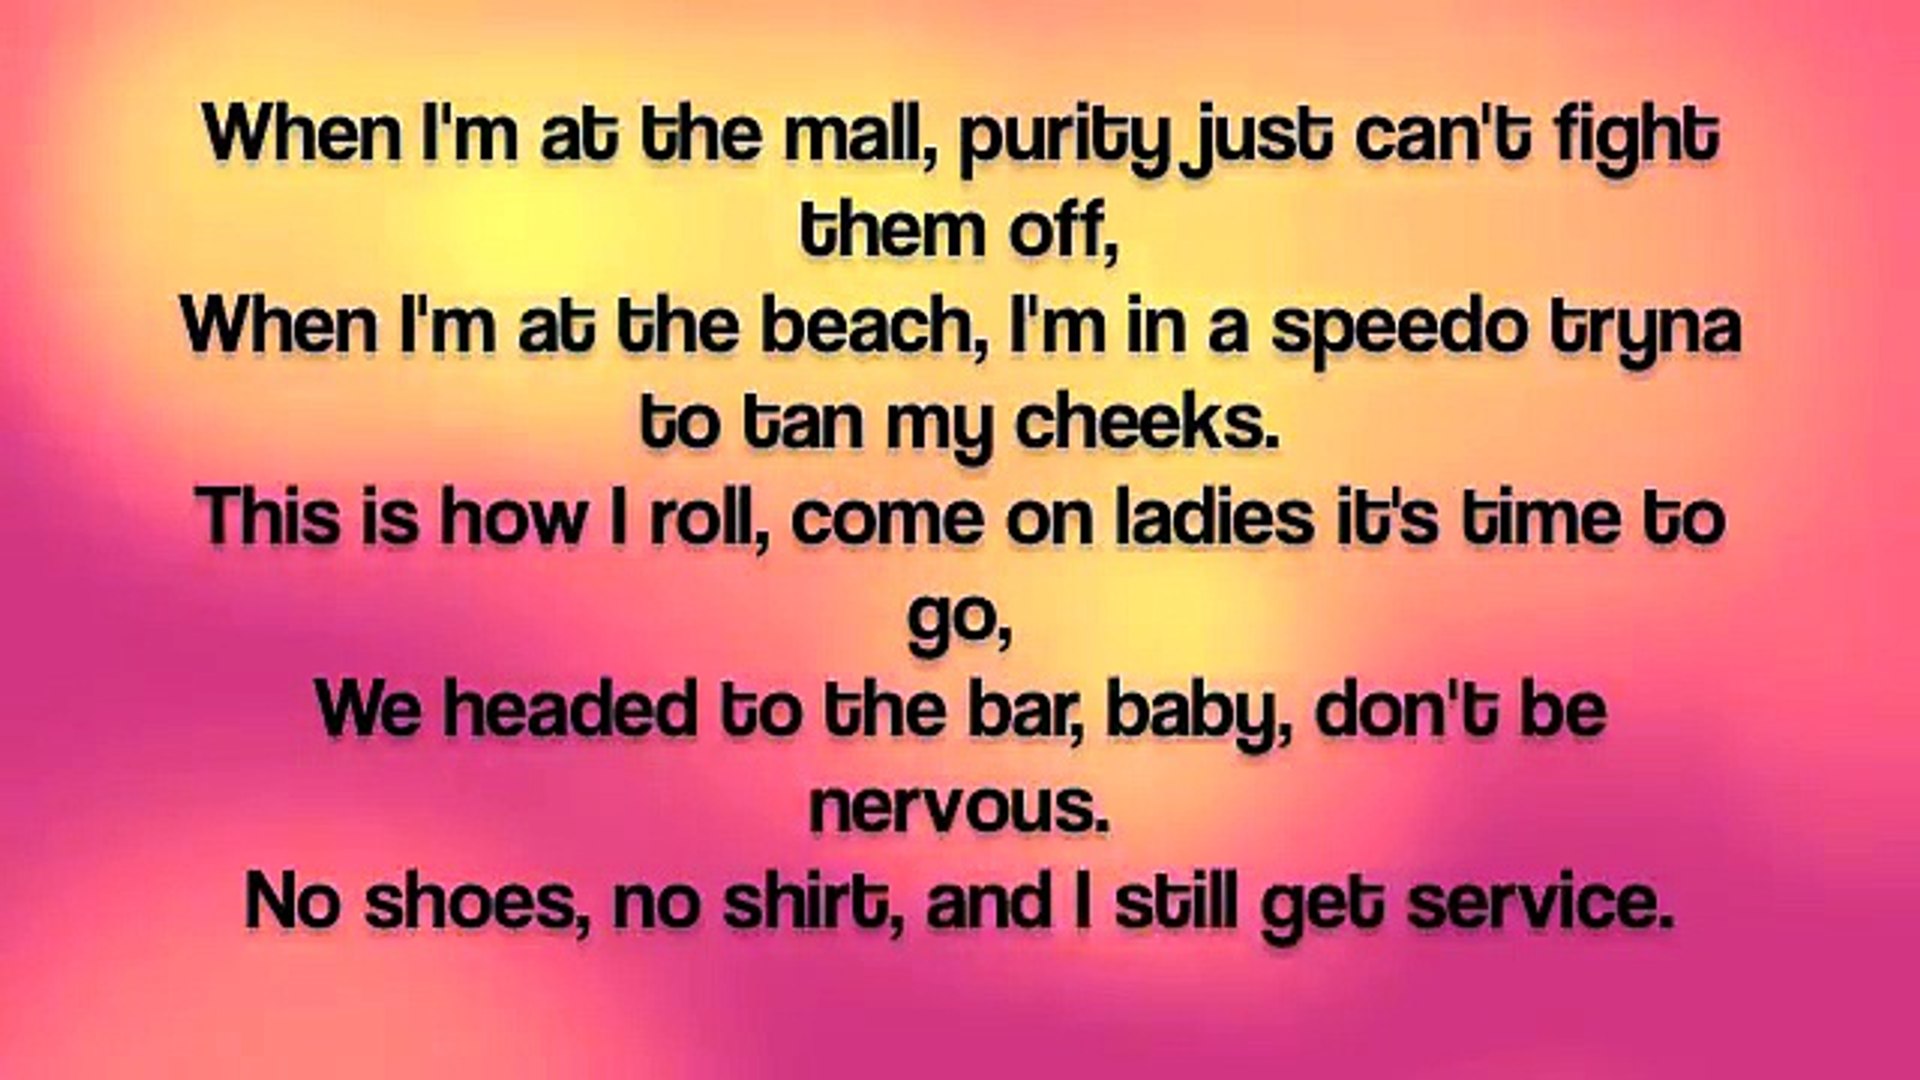 I'm Sexy And I Know It lyrics by LMFAO - video Dailymotion